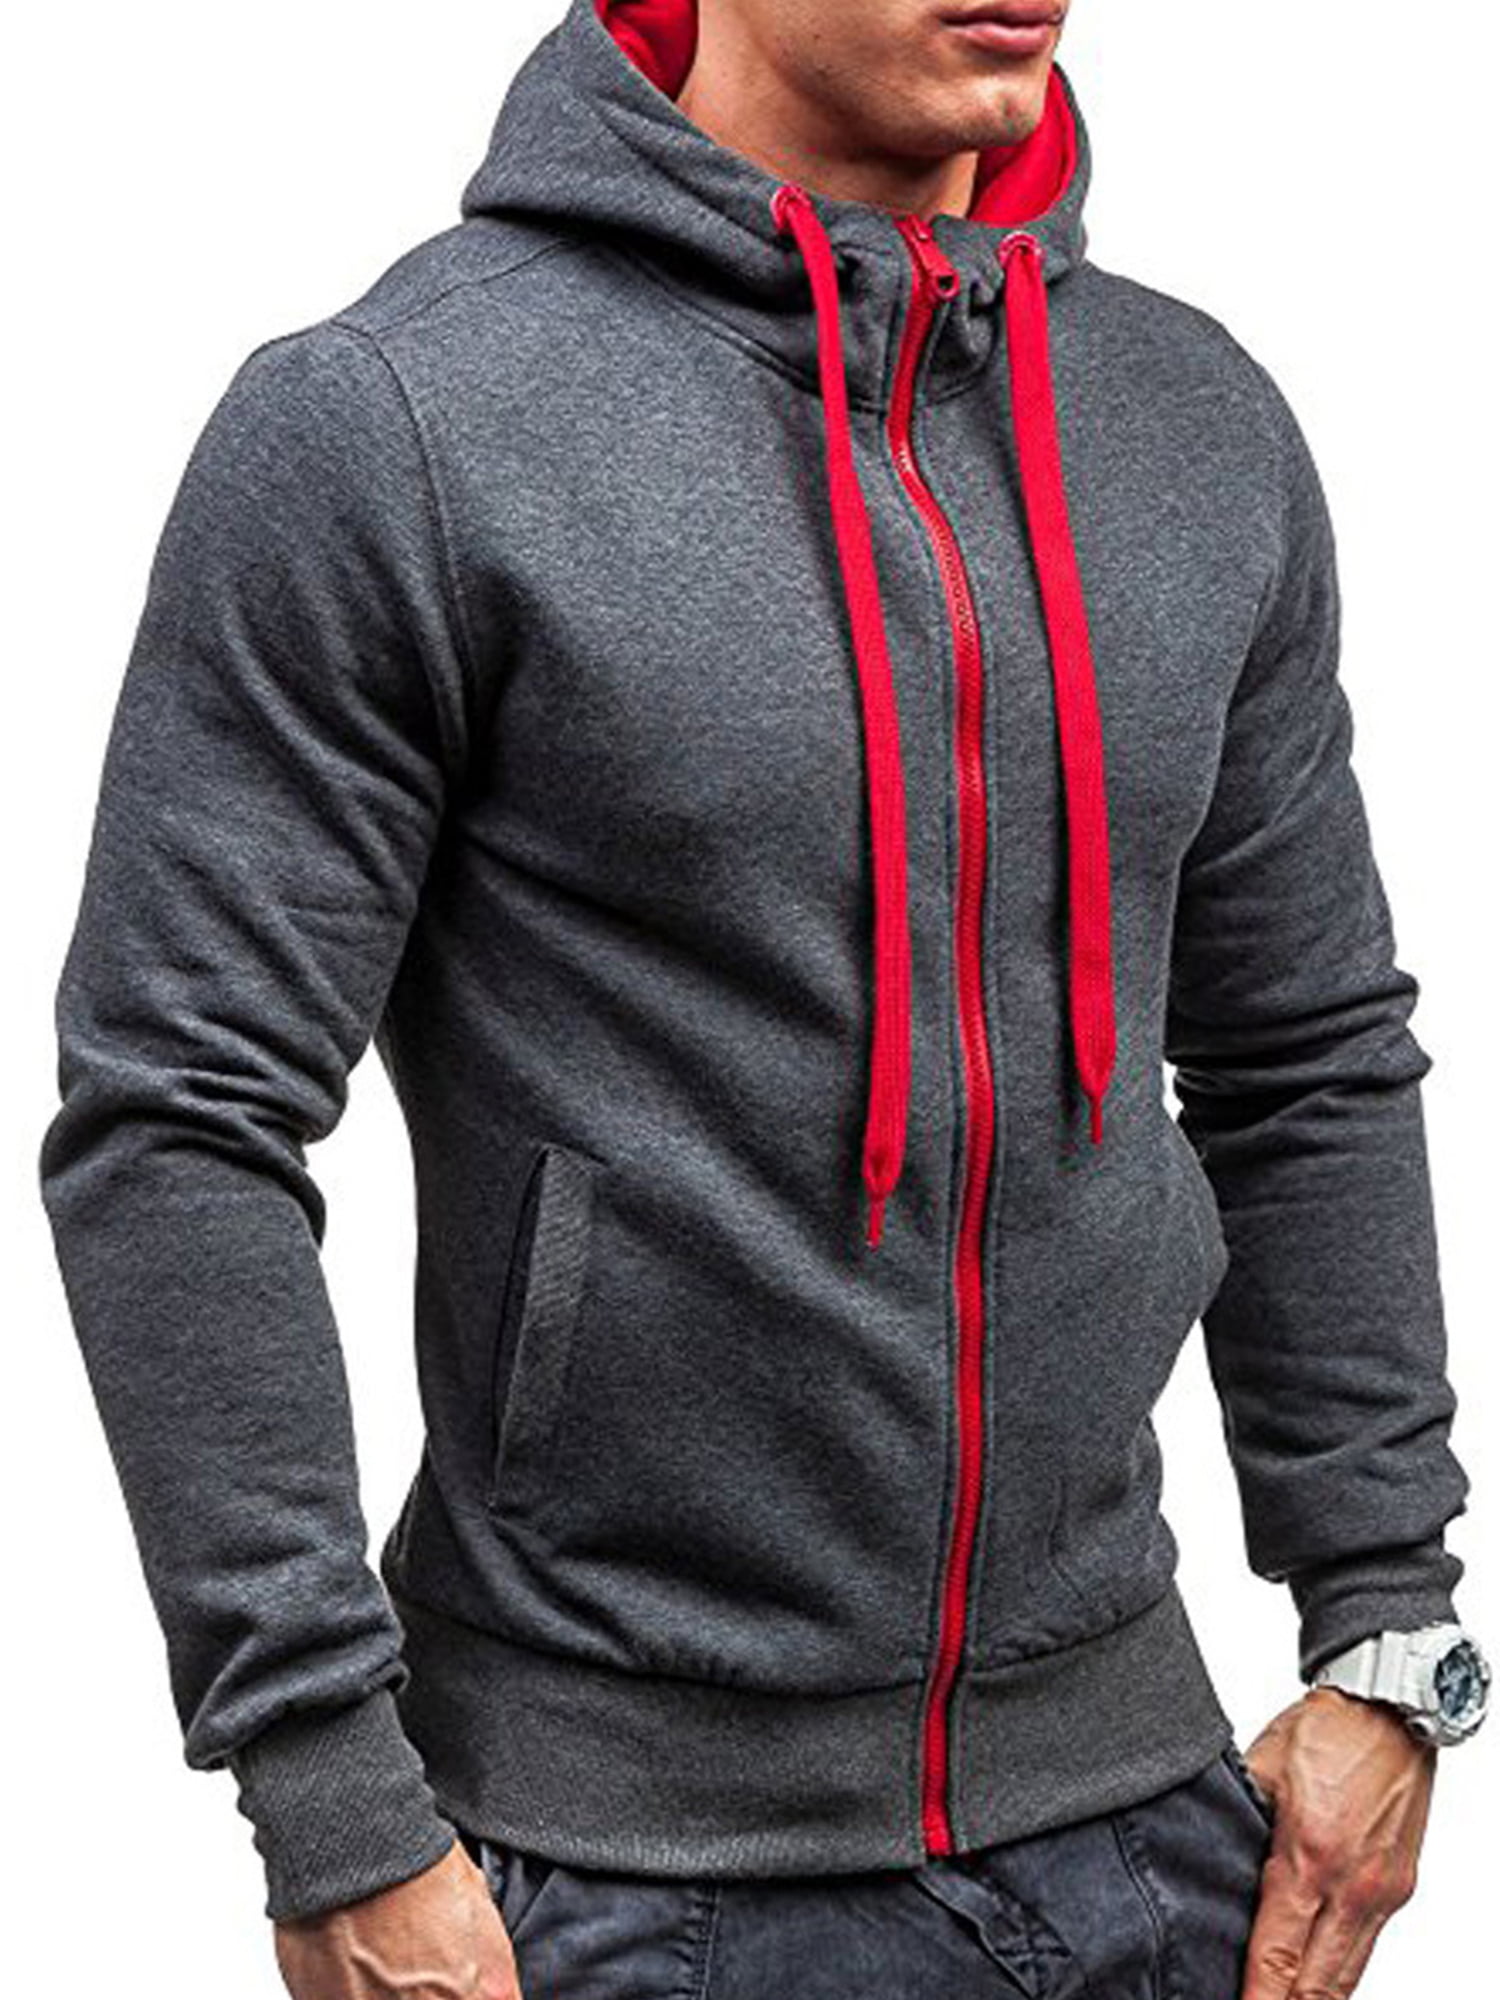 Hoodies for Men with Designs Pullover.Mens Autumn Winter Pure Color Pocket Zipper Hooded Jacket Caps Top Coat 